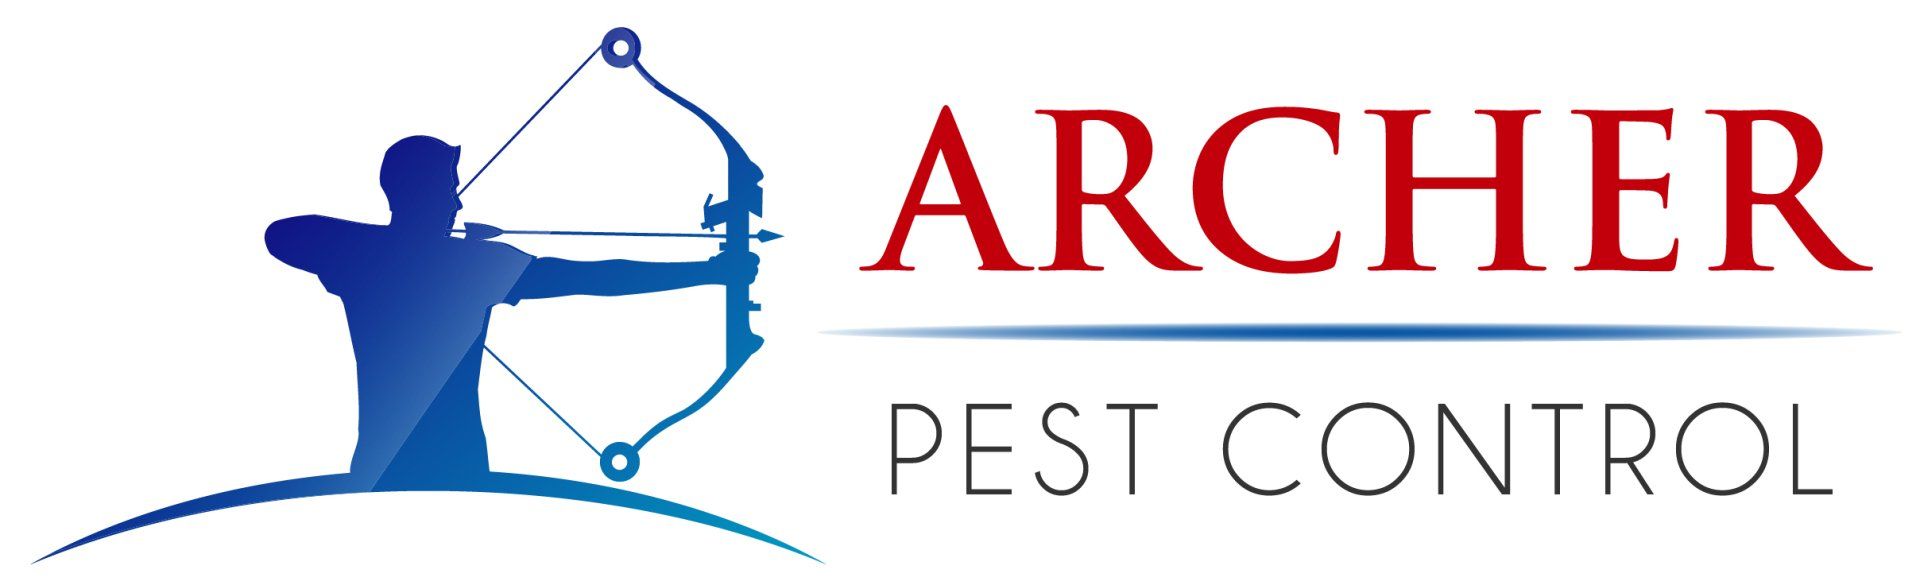 Archer Pest Control